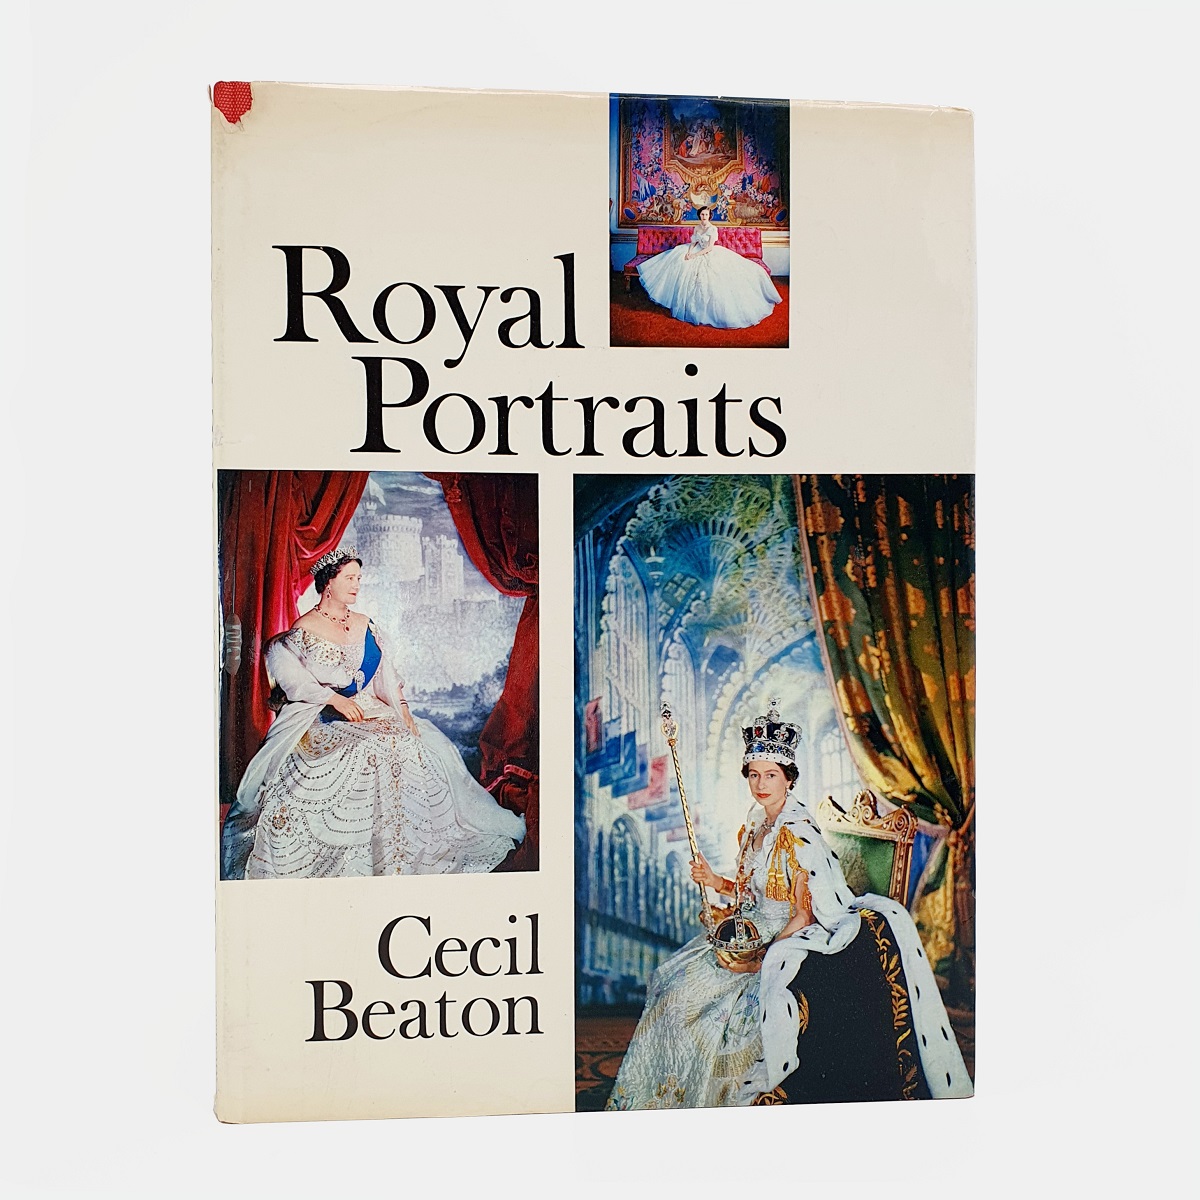 Royal Portraits